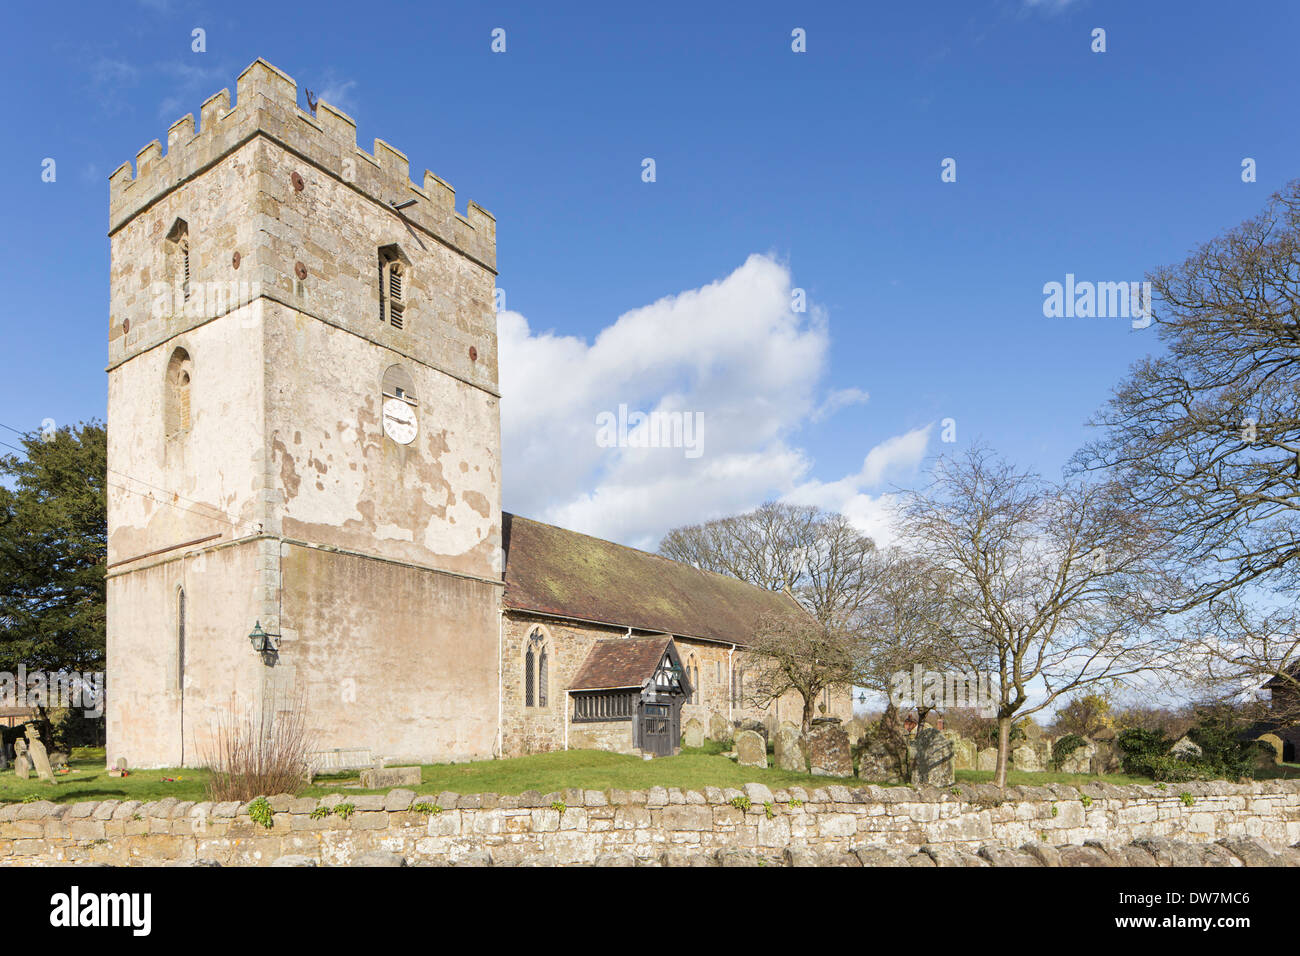 St James's Church Cardington, Shropshire, England, UK Stock Photo